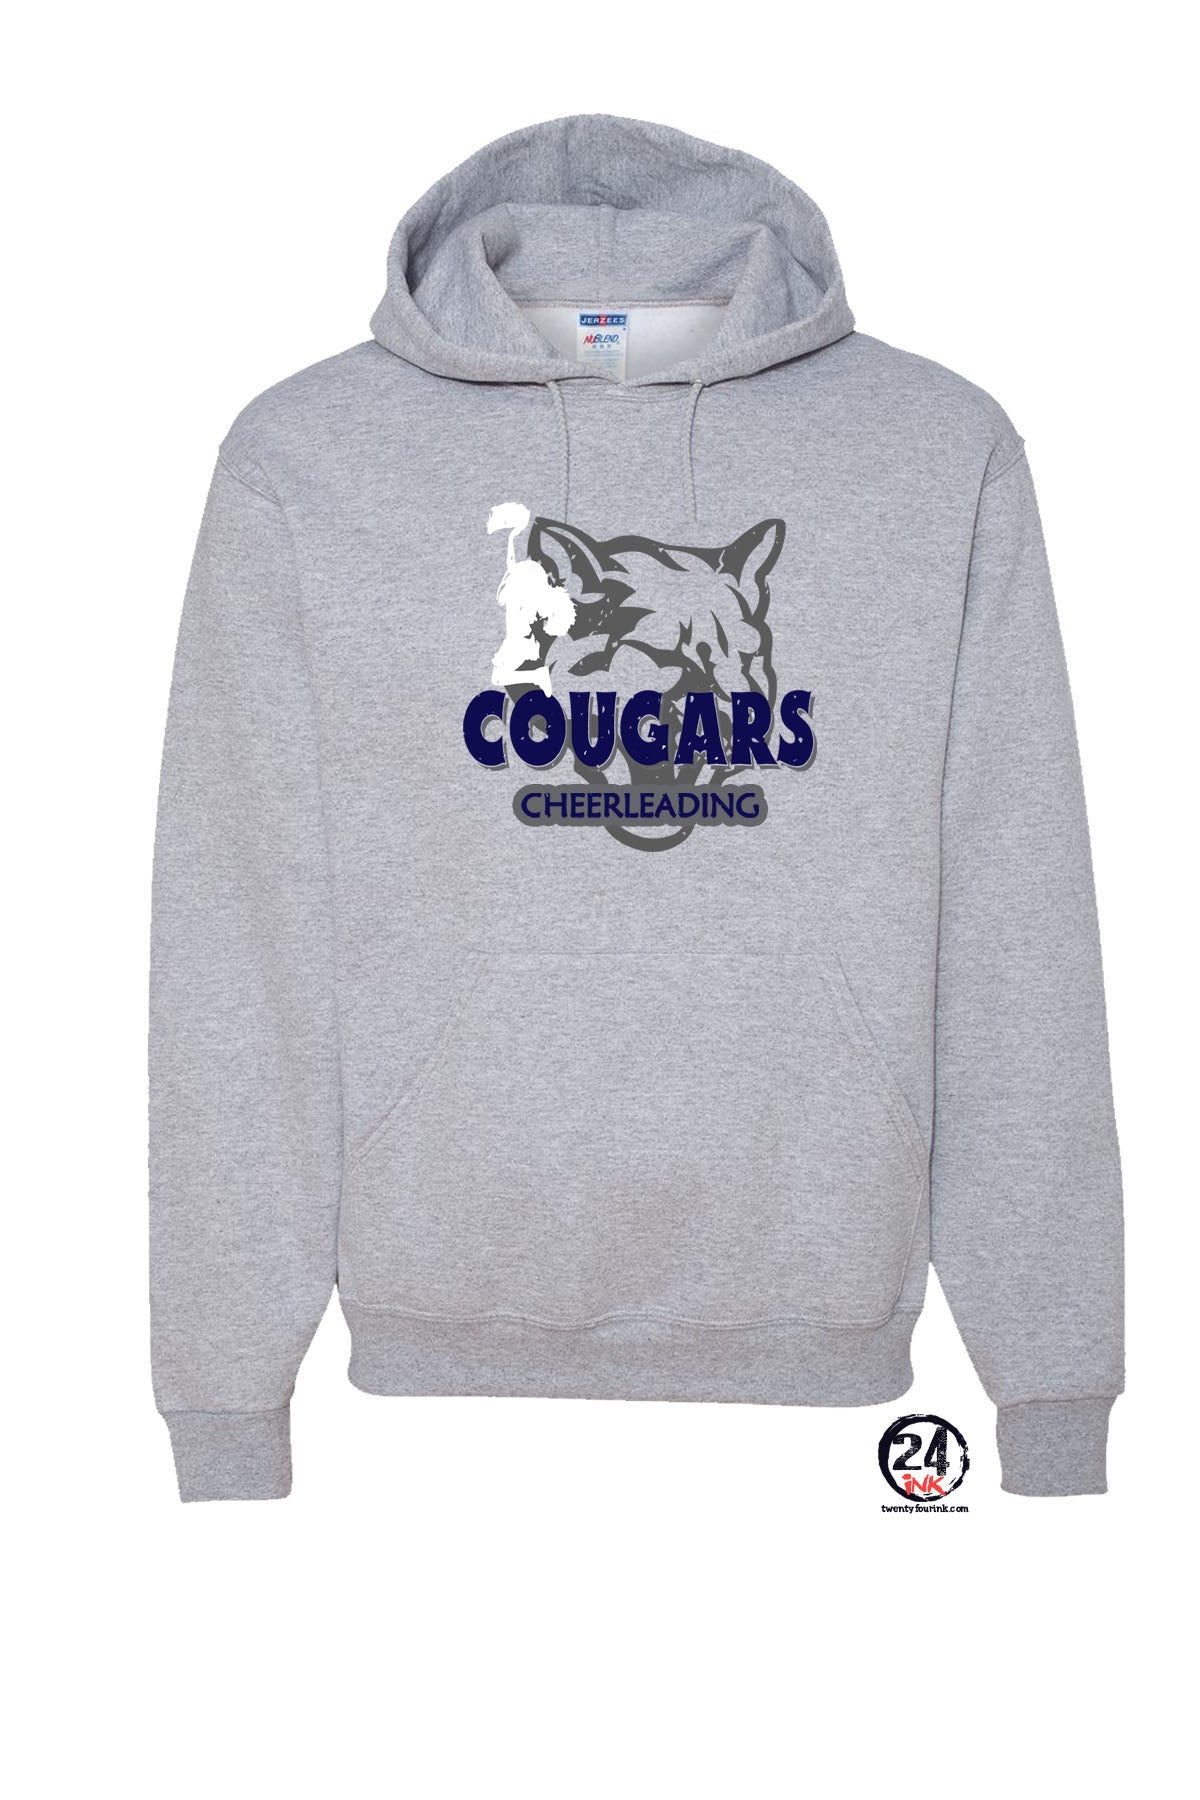 Cougar Cheerleading Hooded Sweatshirt